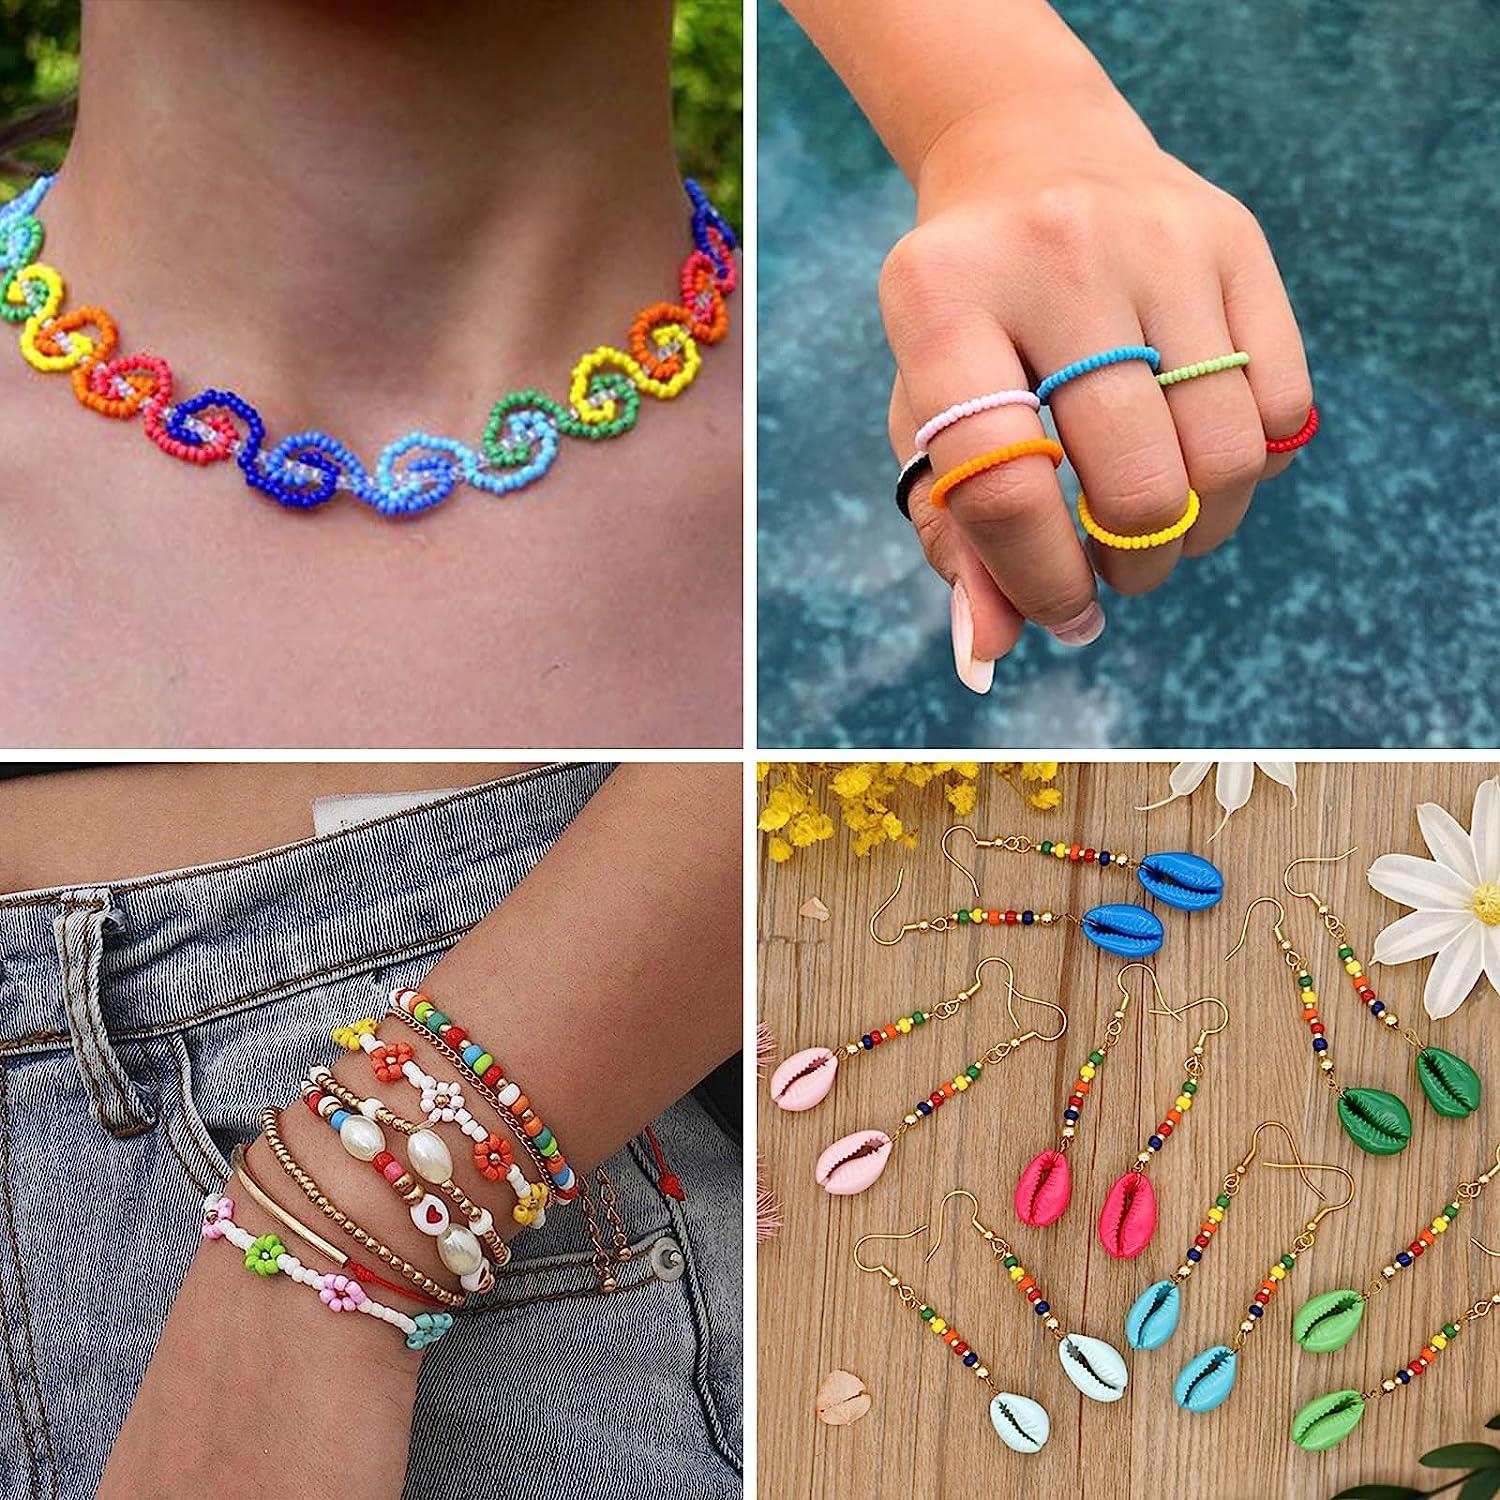  KOTHER 48 Colors Pony Beads for Bracelets Making Kit